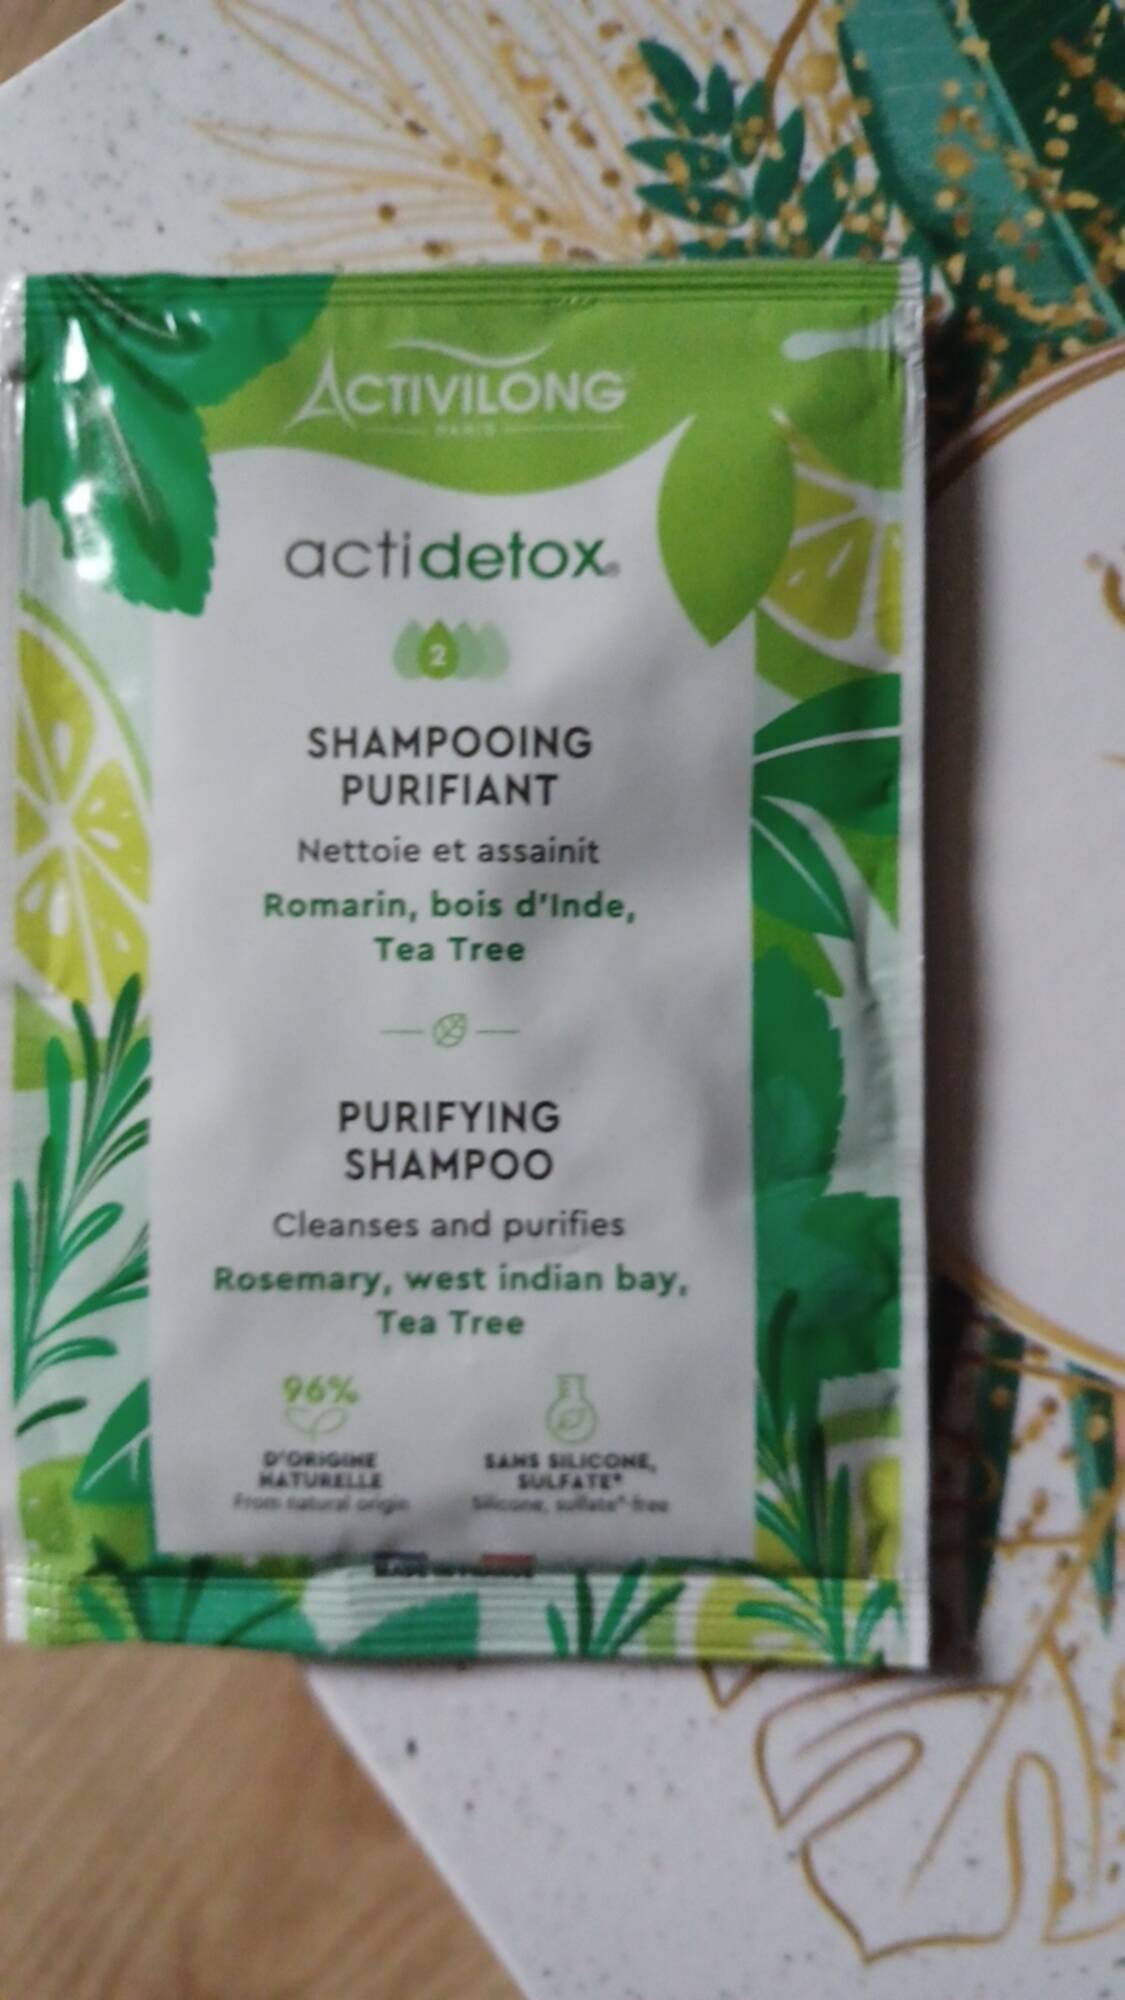 ACTIVILONG - Actidetox - Shampooing purifiant